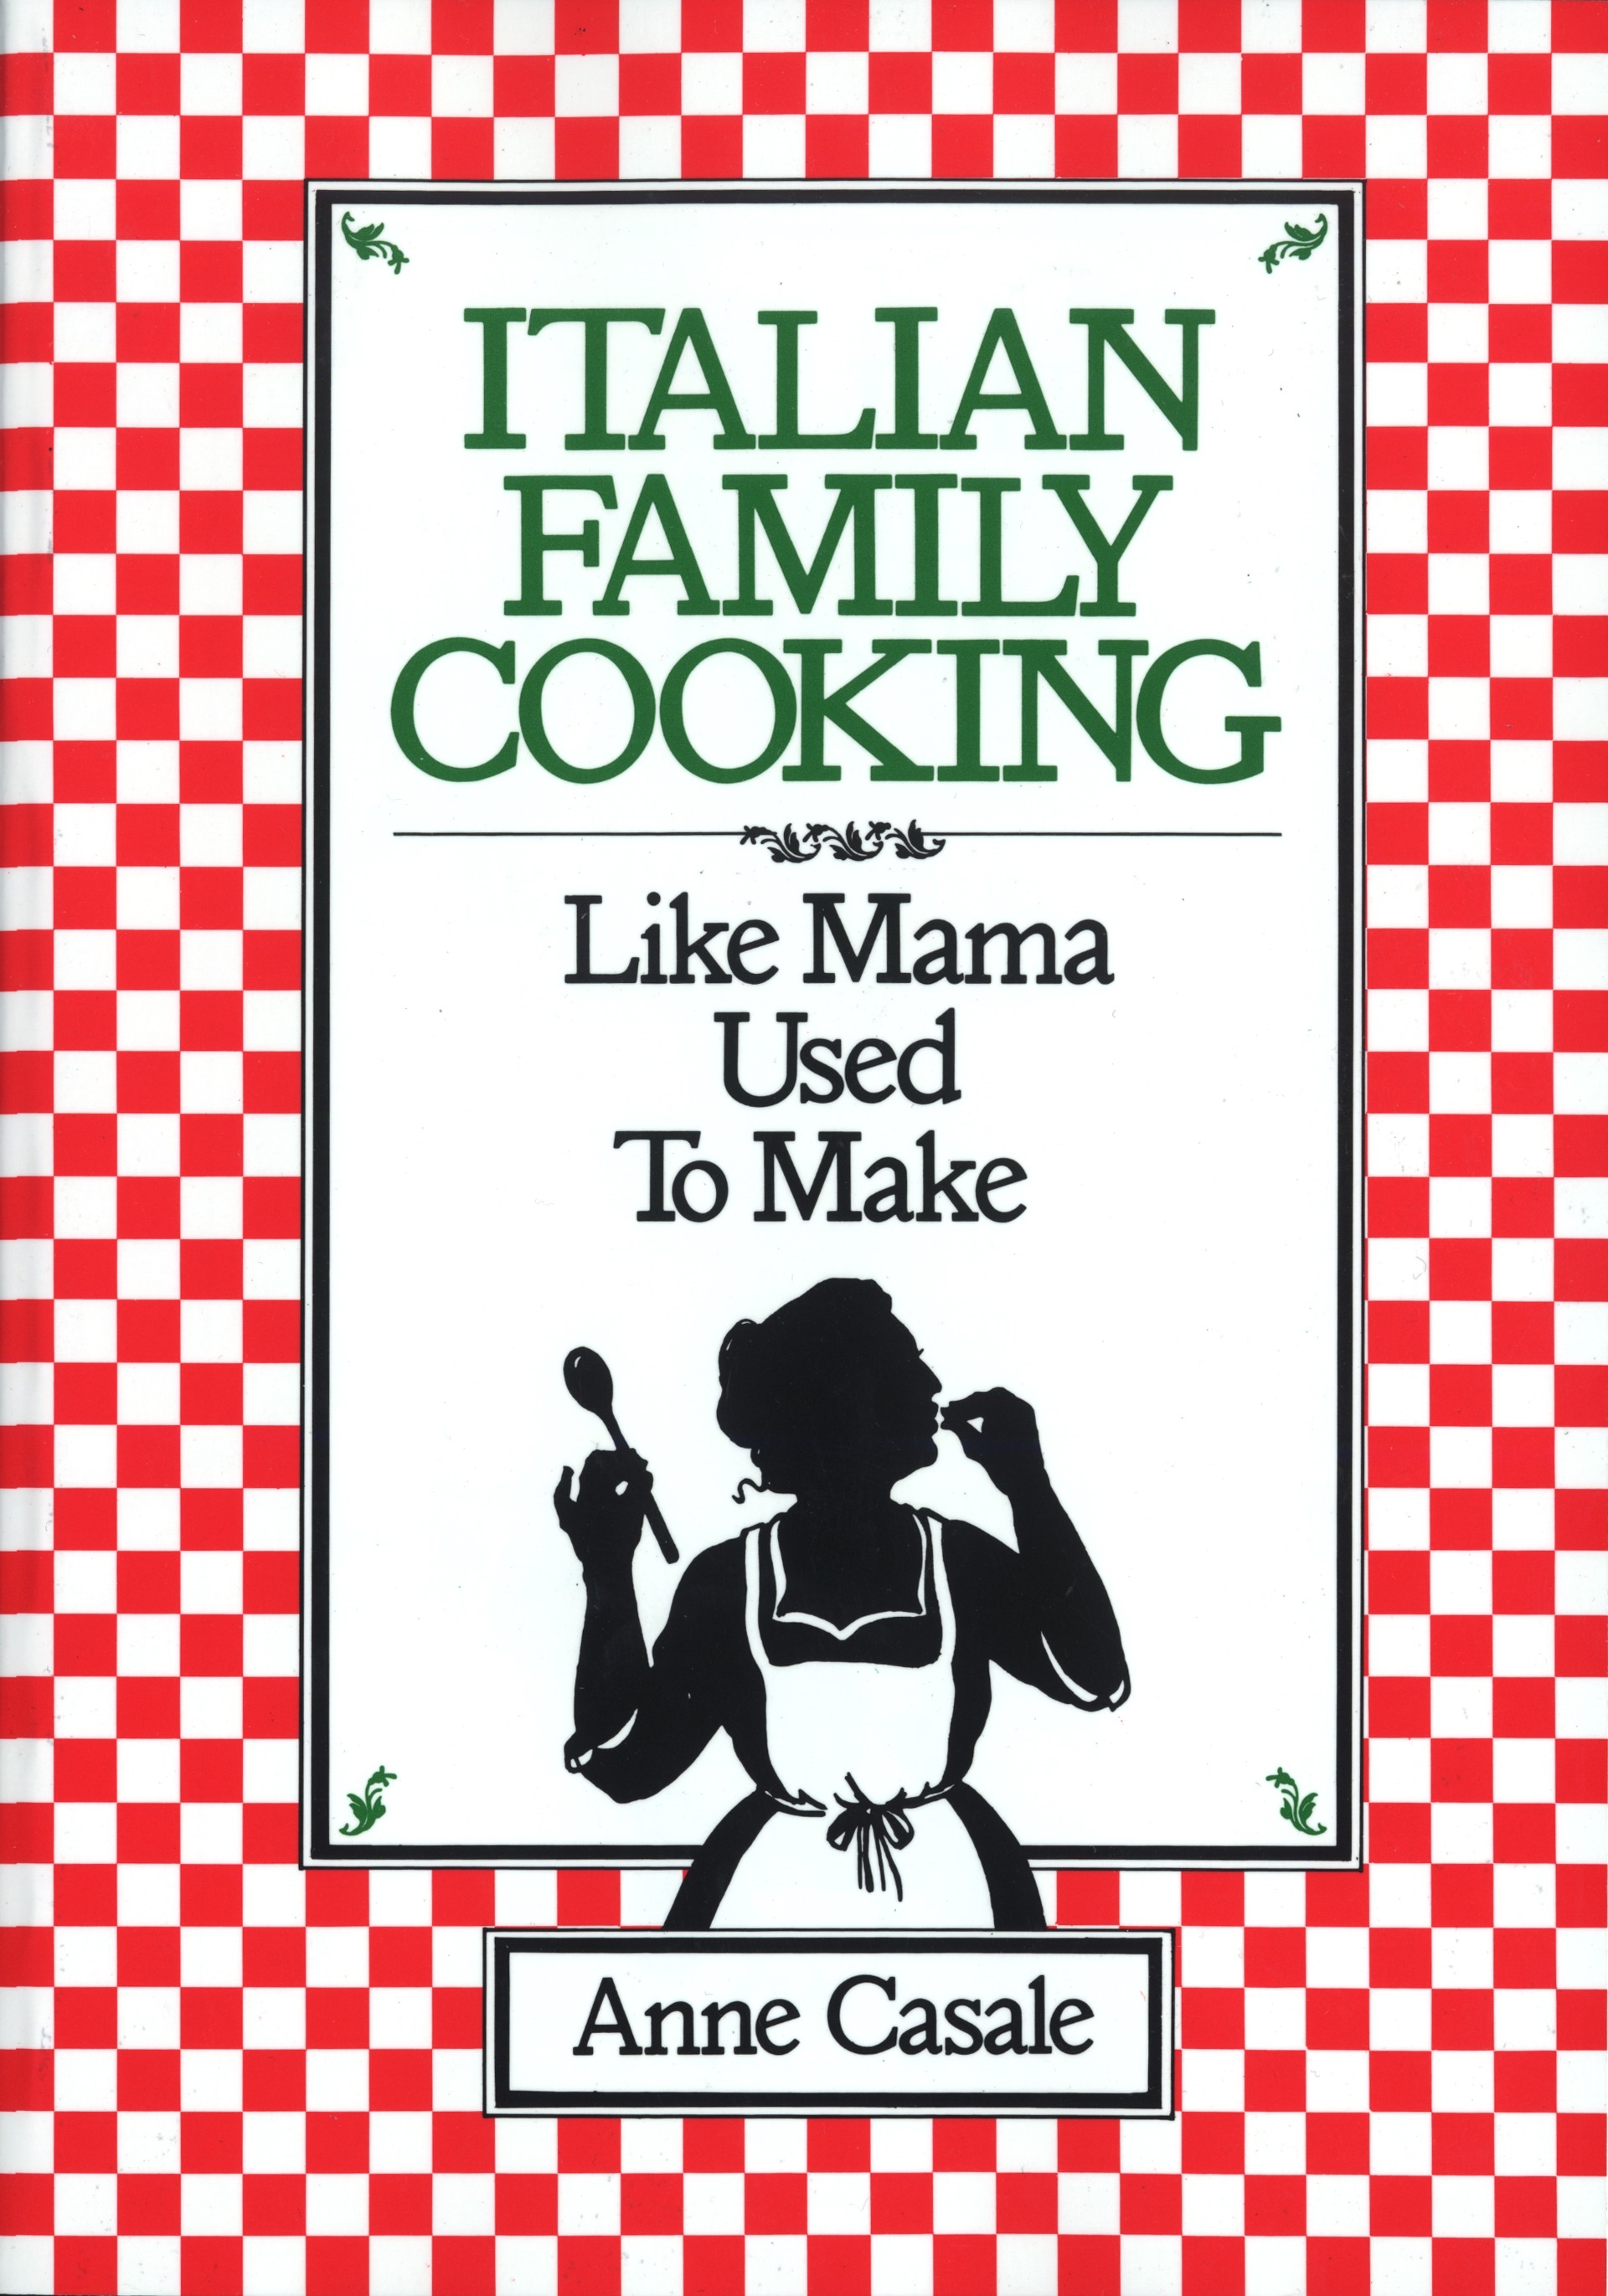 My mother said i like cooking. Italian Family.